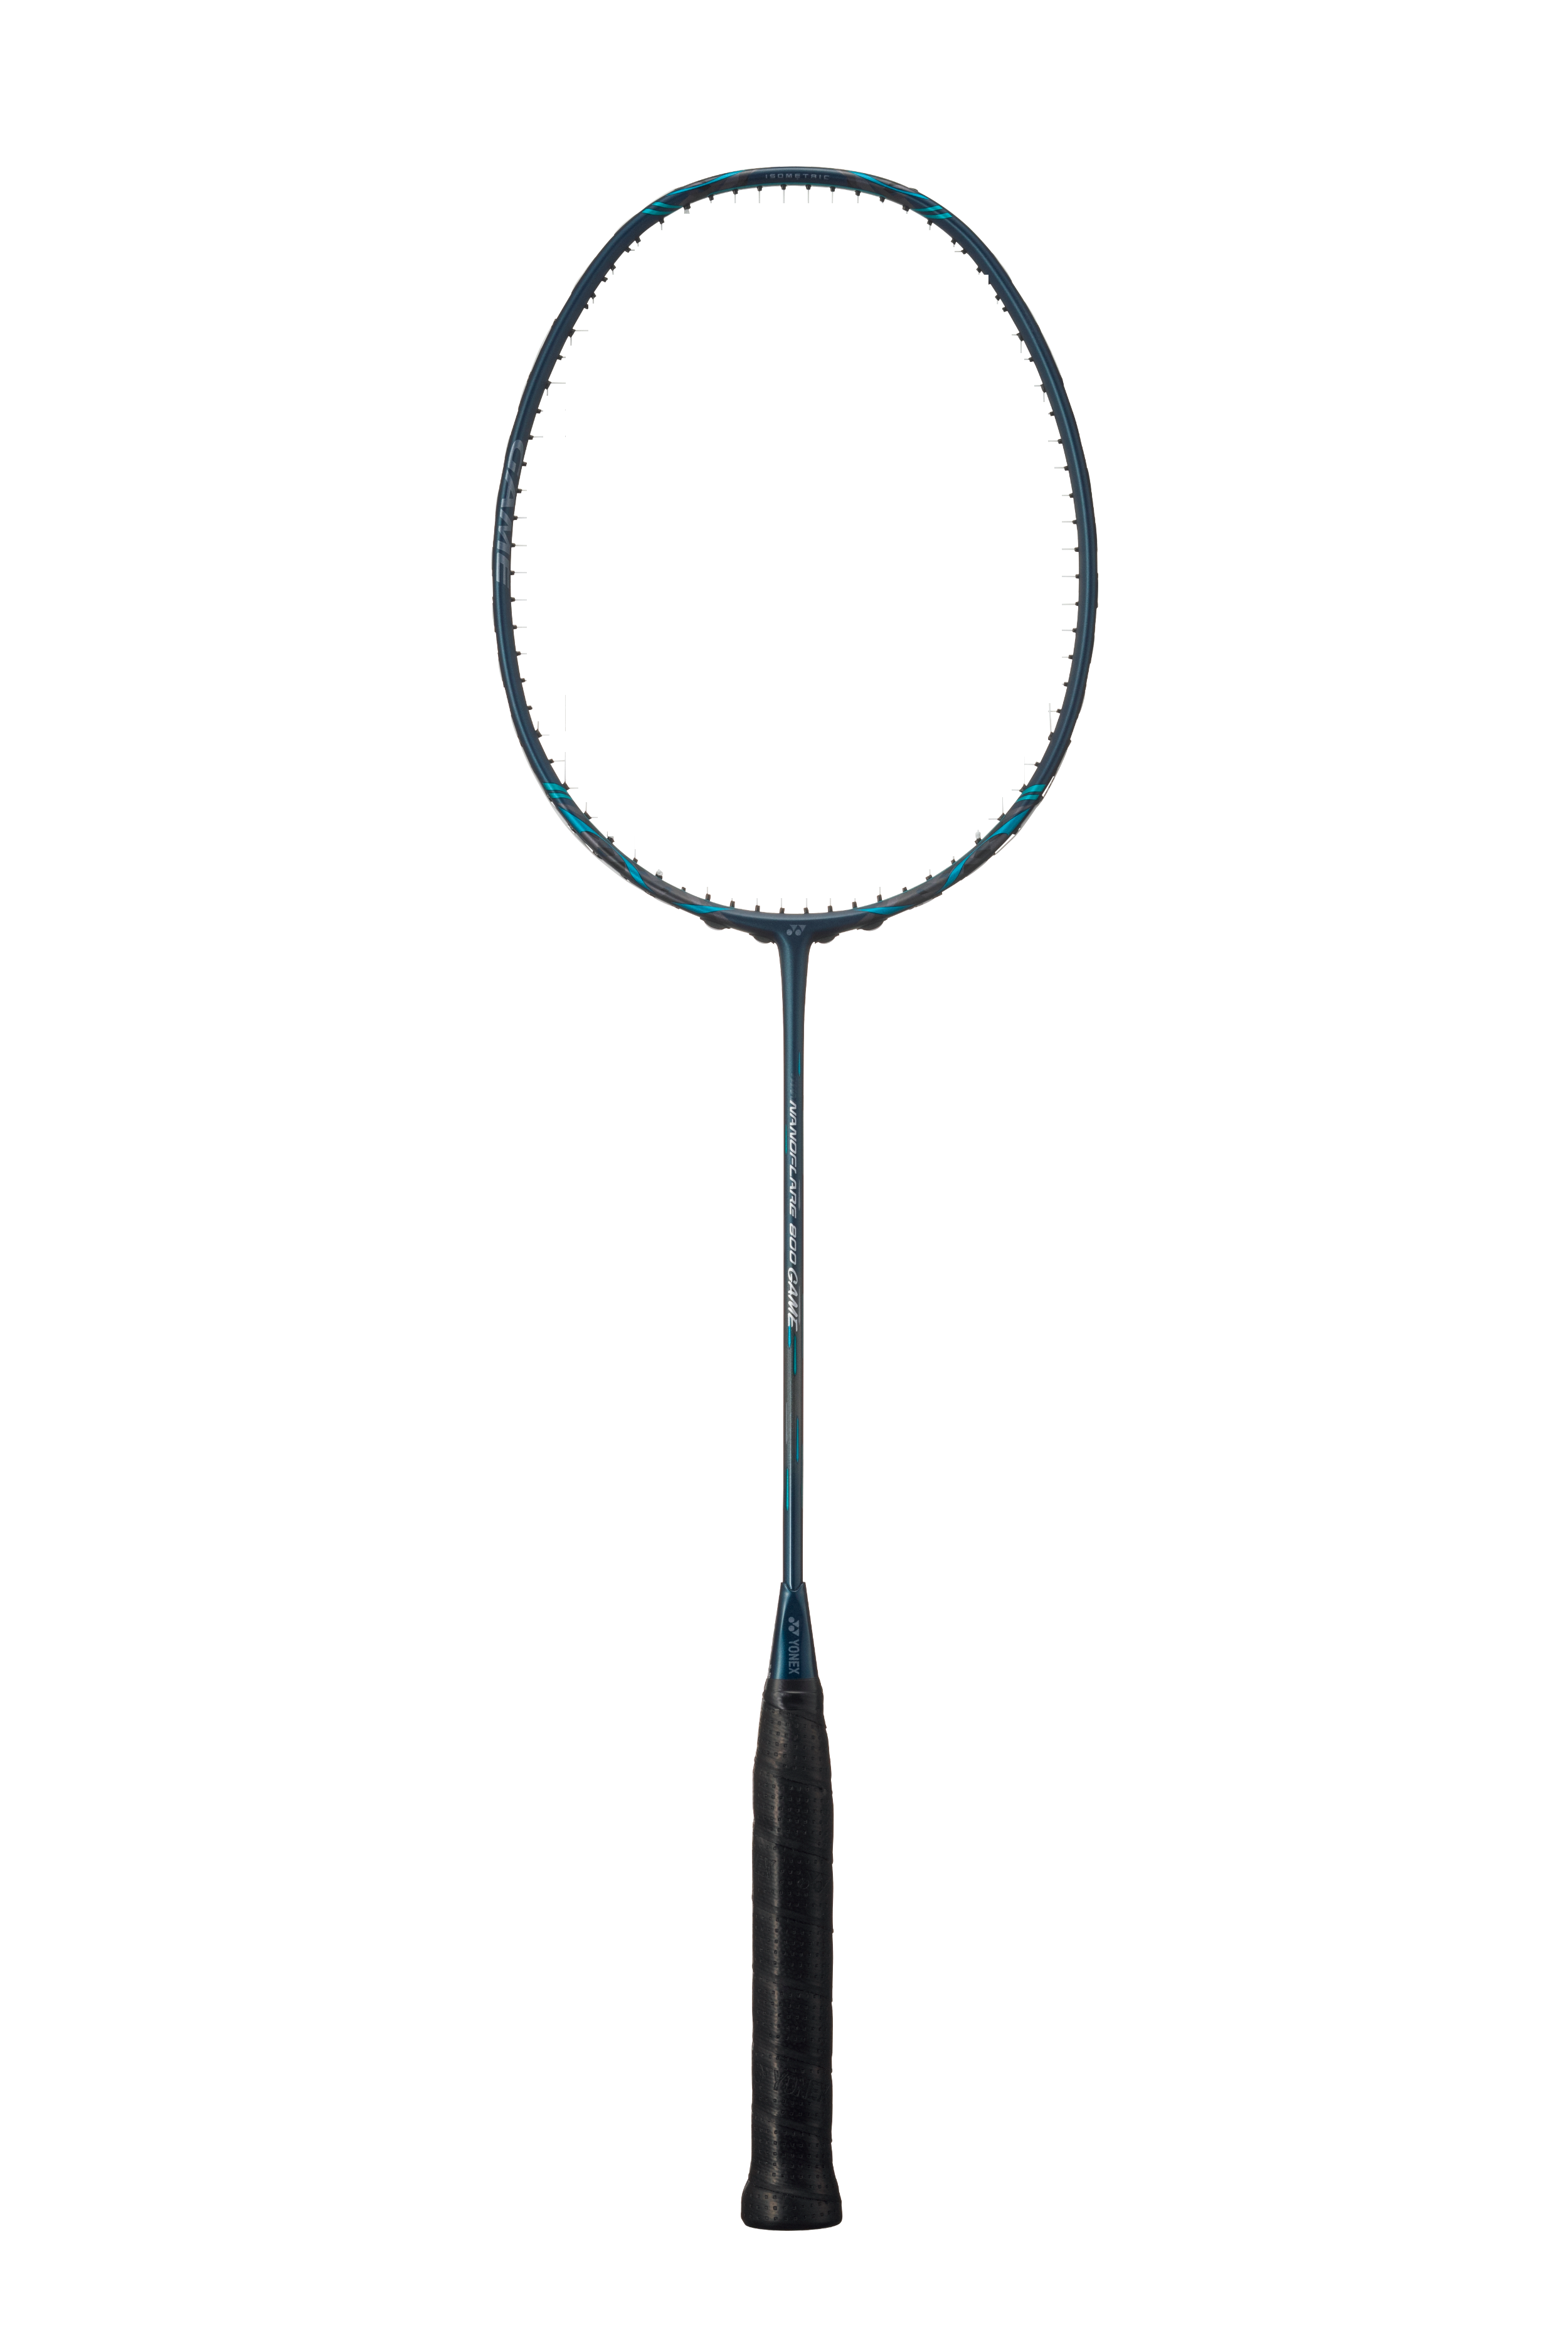 YONEX Nanoflare 800 Game Badminton Racket - NF800G - Deep Green - Frame only